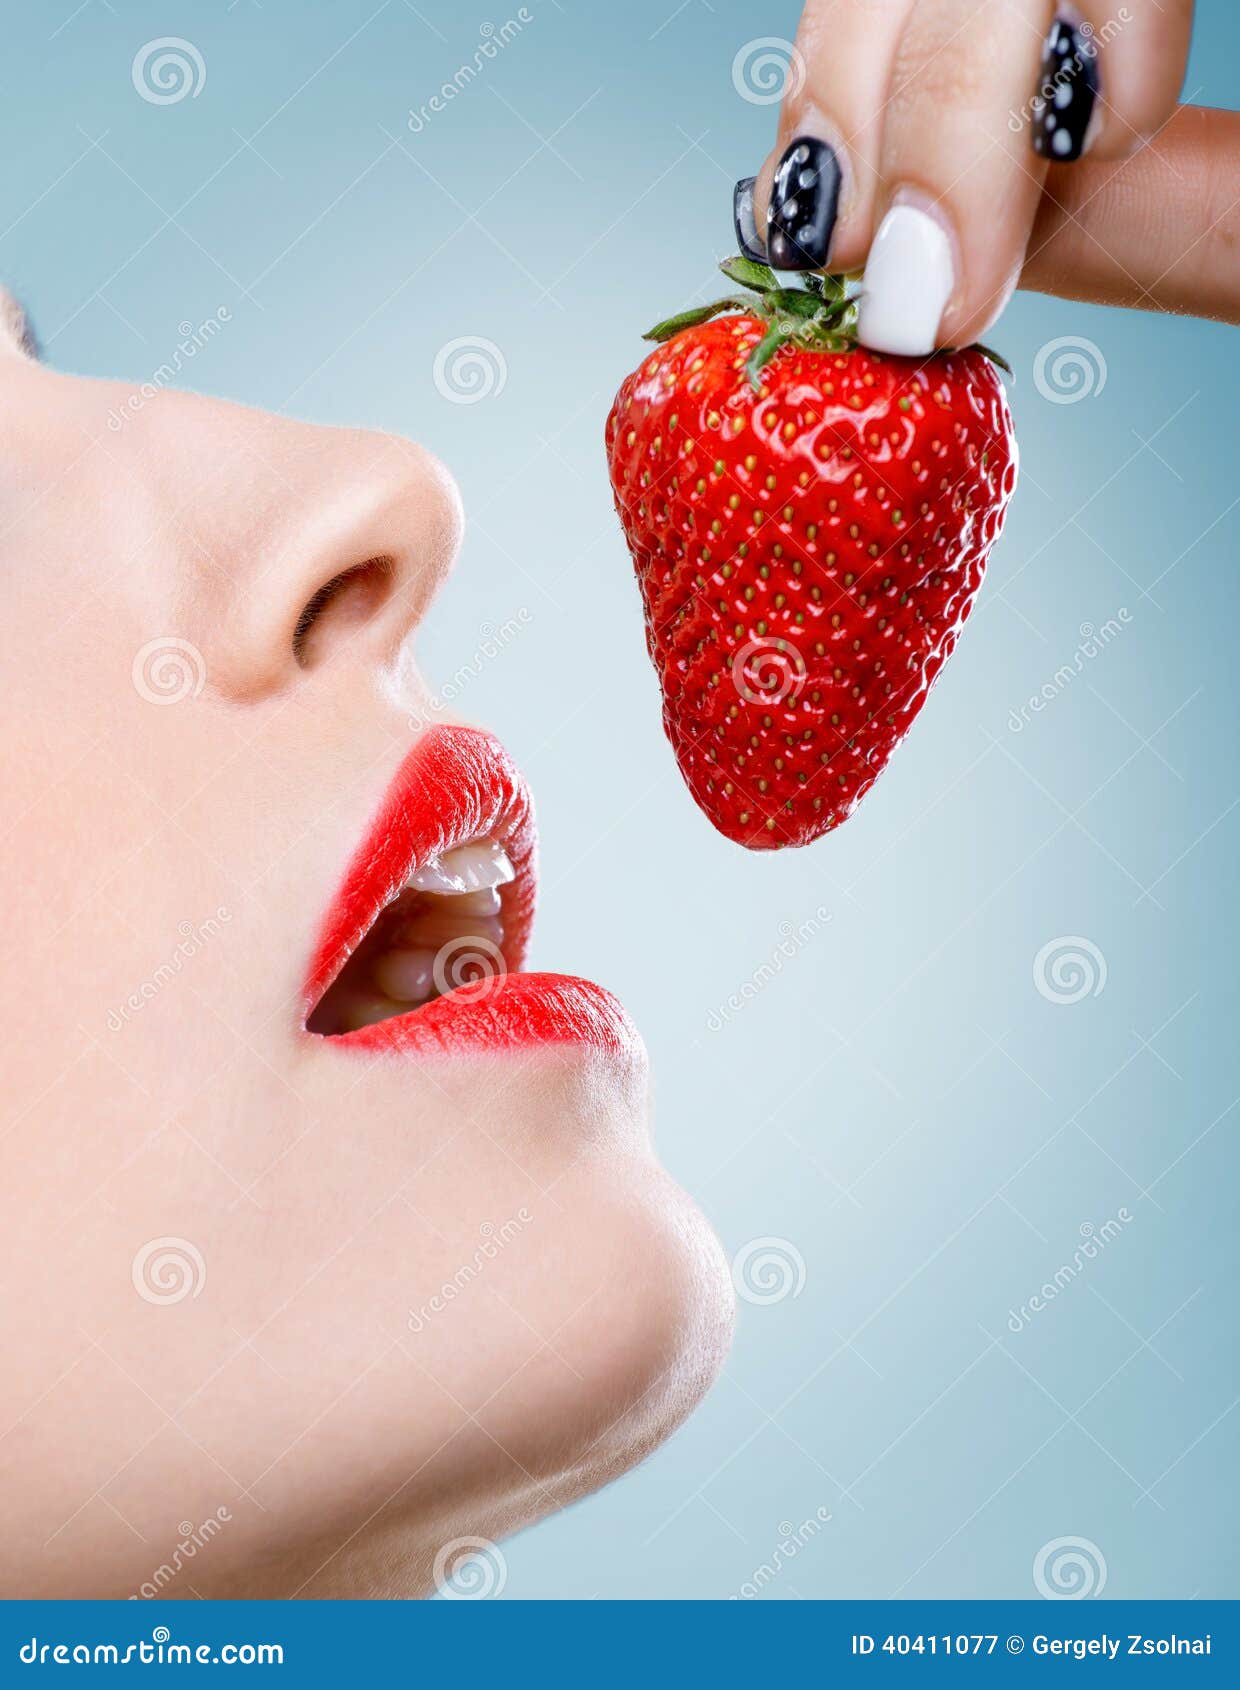 seduction - women's mouth eats strawberries